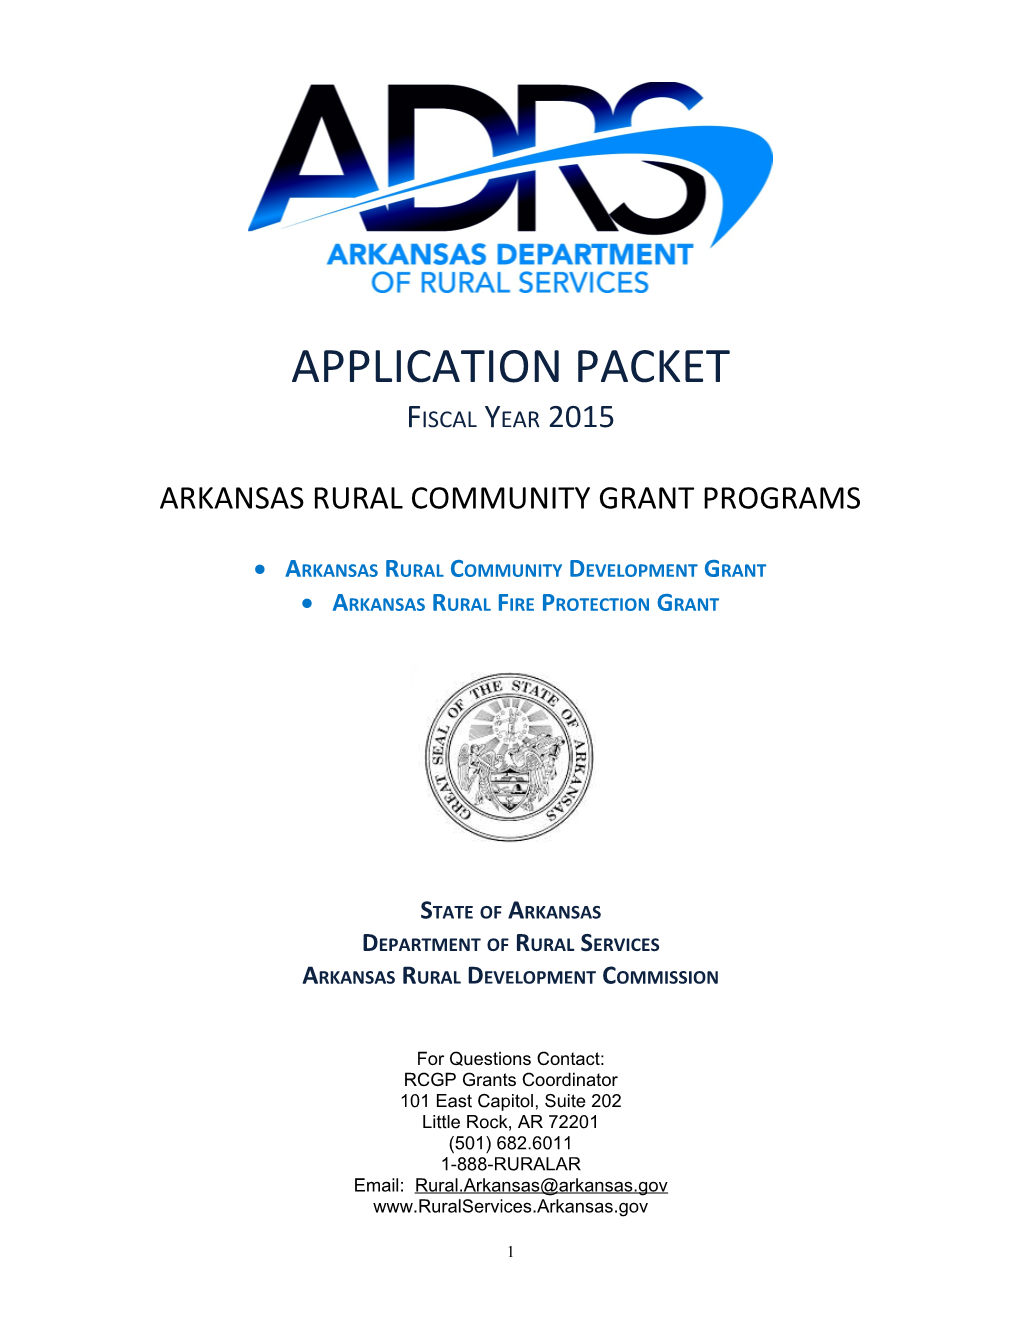 Arkansas Rural Community Grant Programs